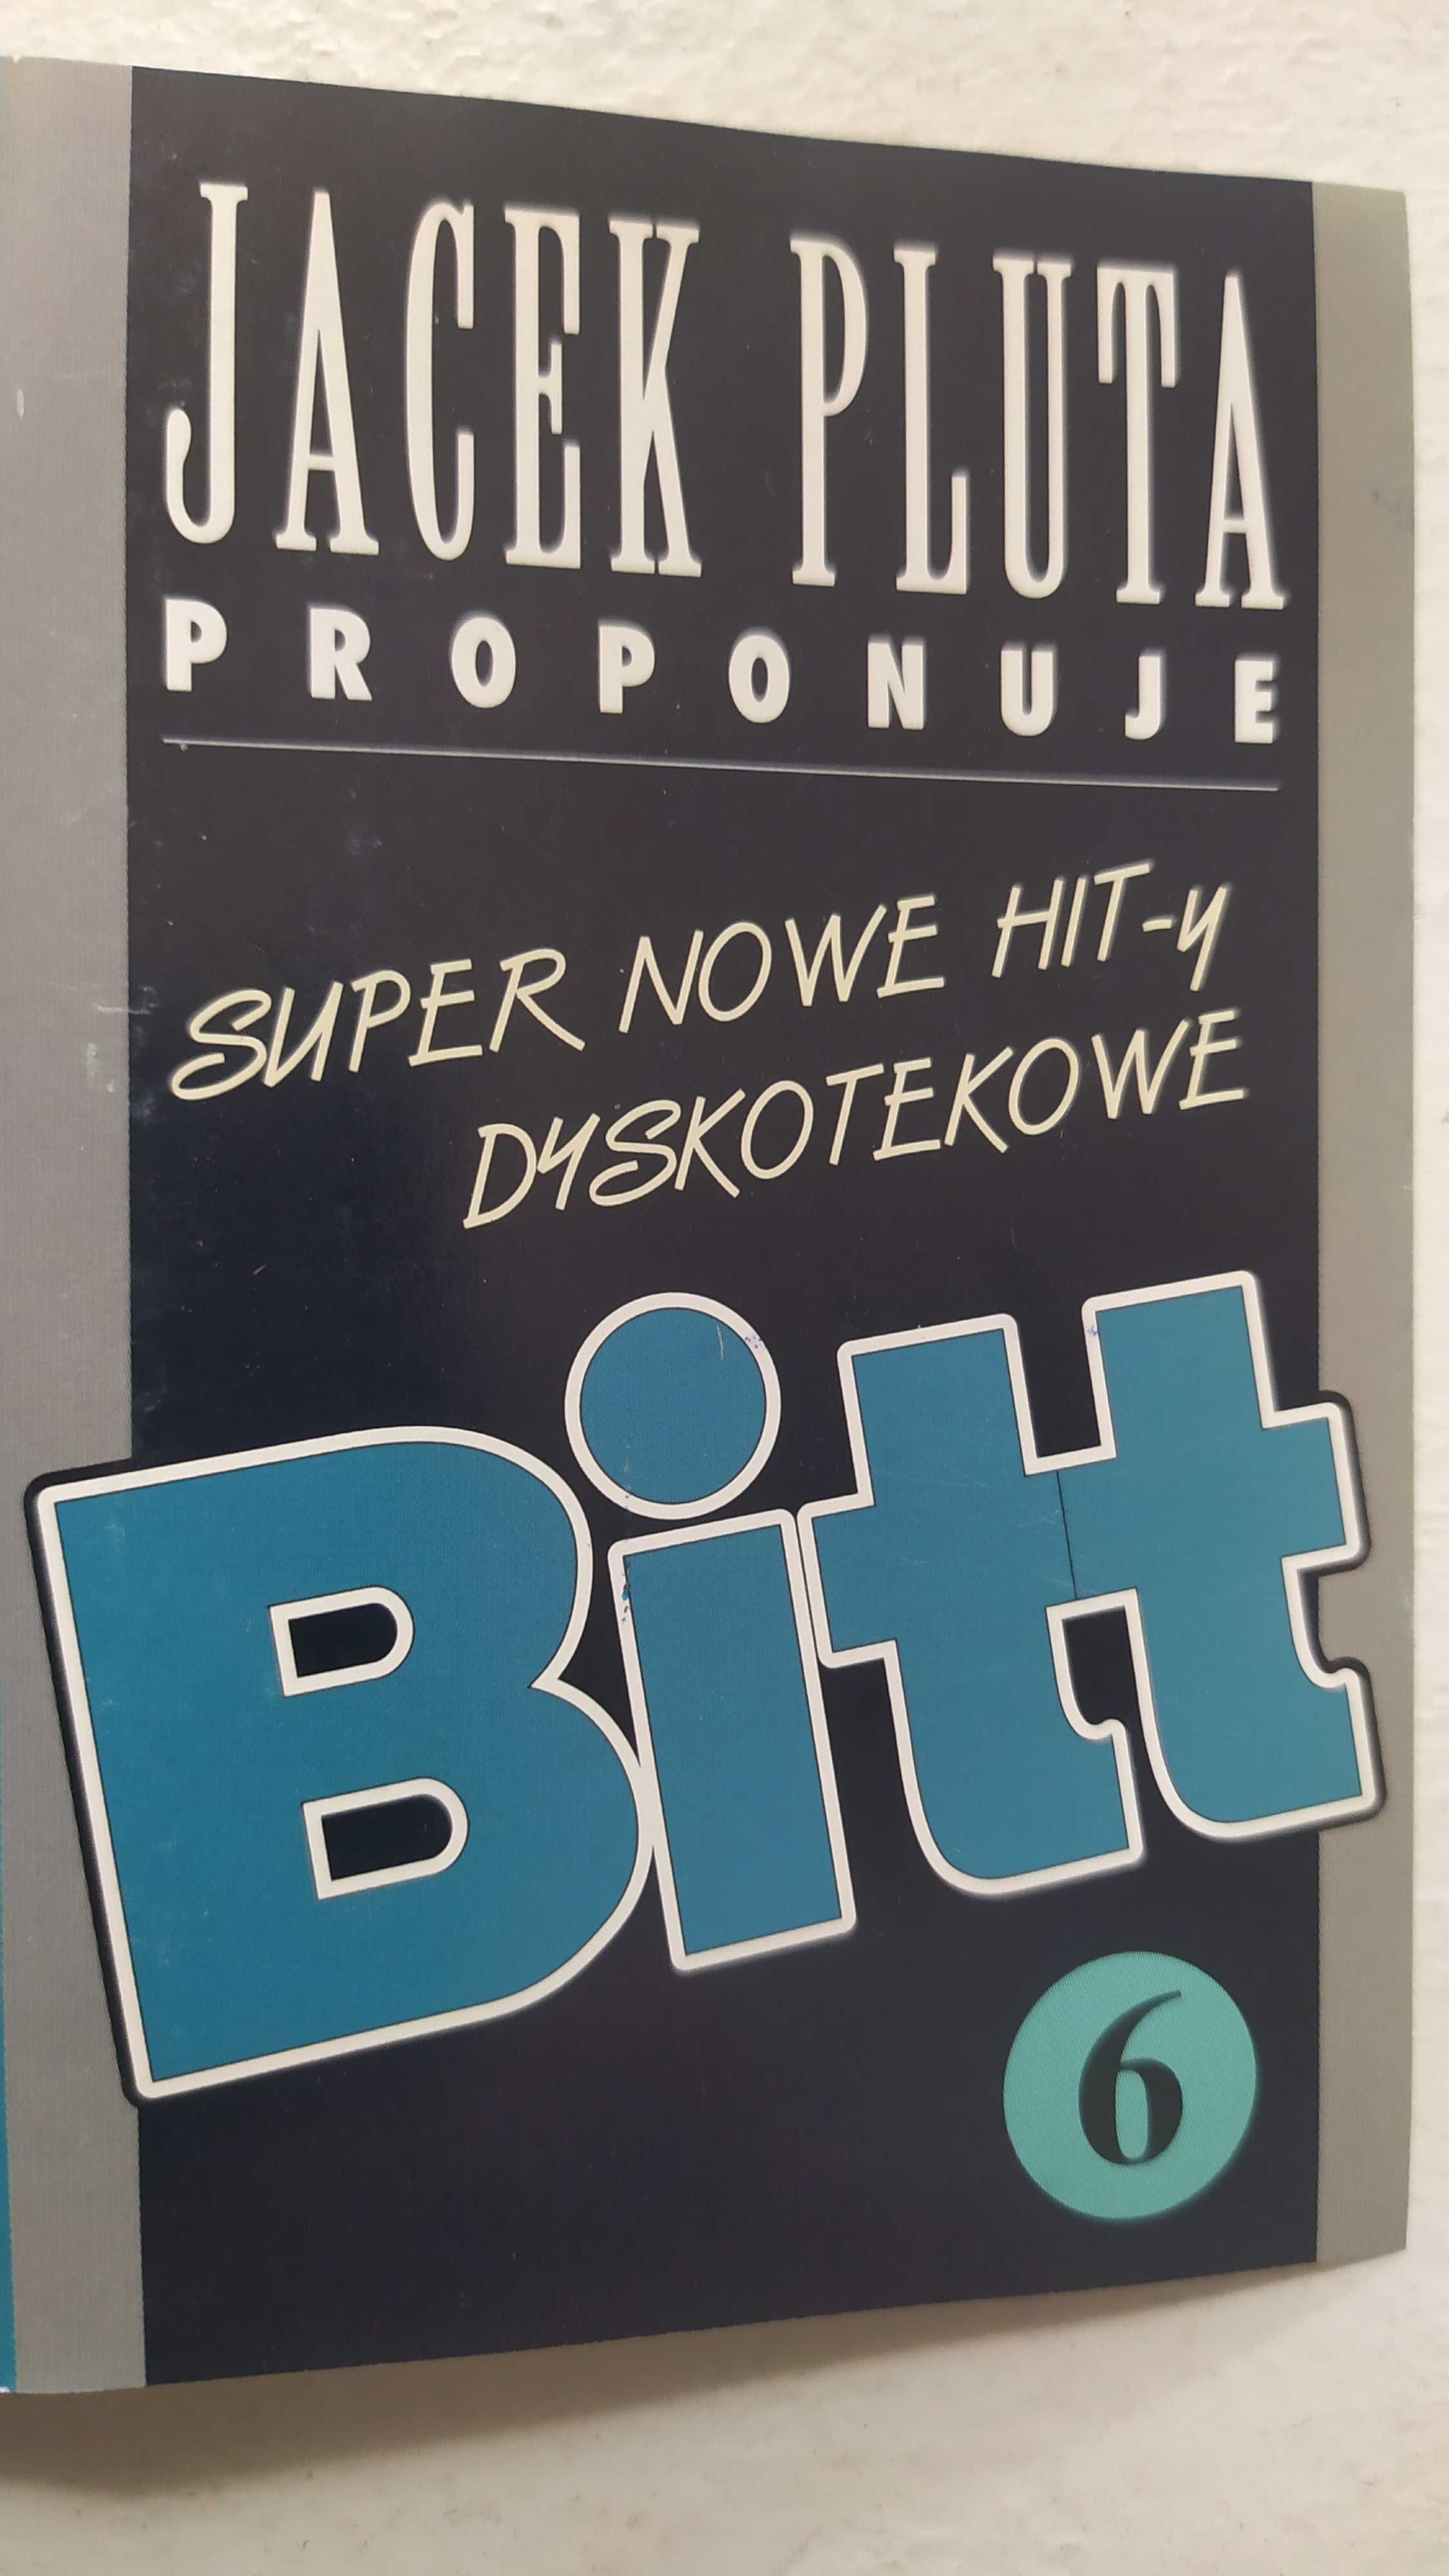 Jacek Pluta Bitt 6 Super nowe hity dyskotekowe kaseta